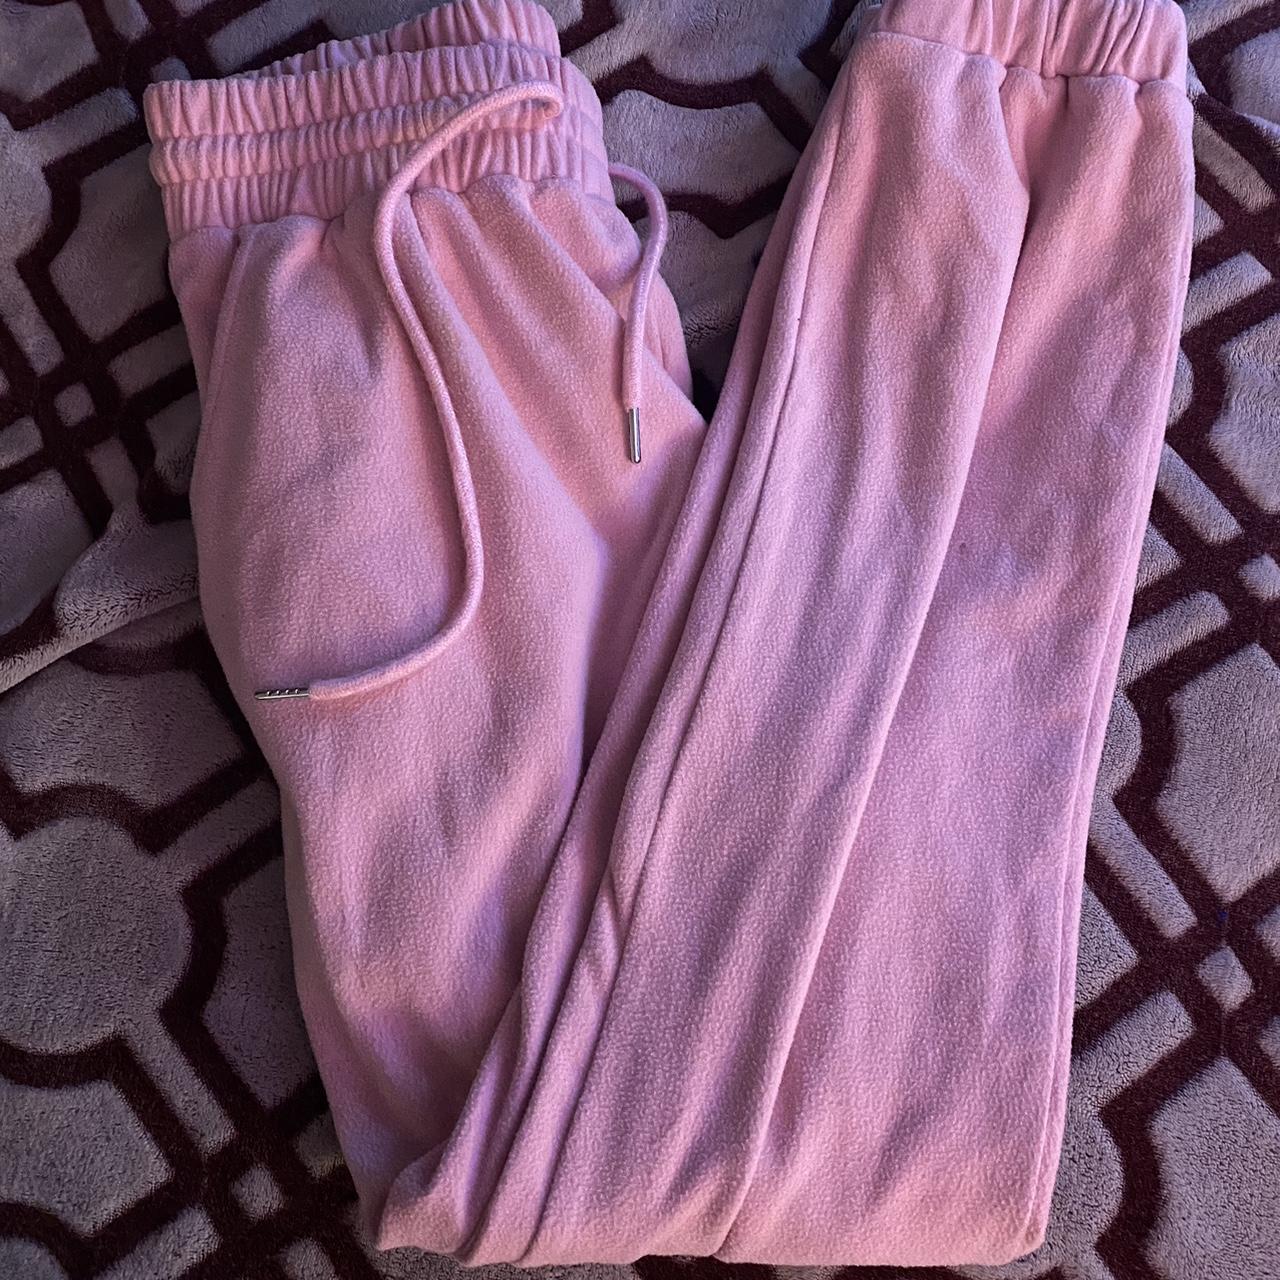 Large pink sweatpants - Depop